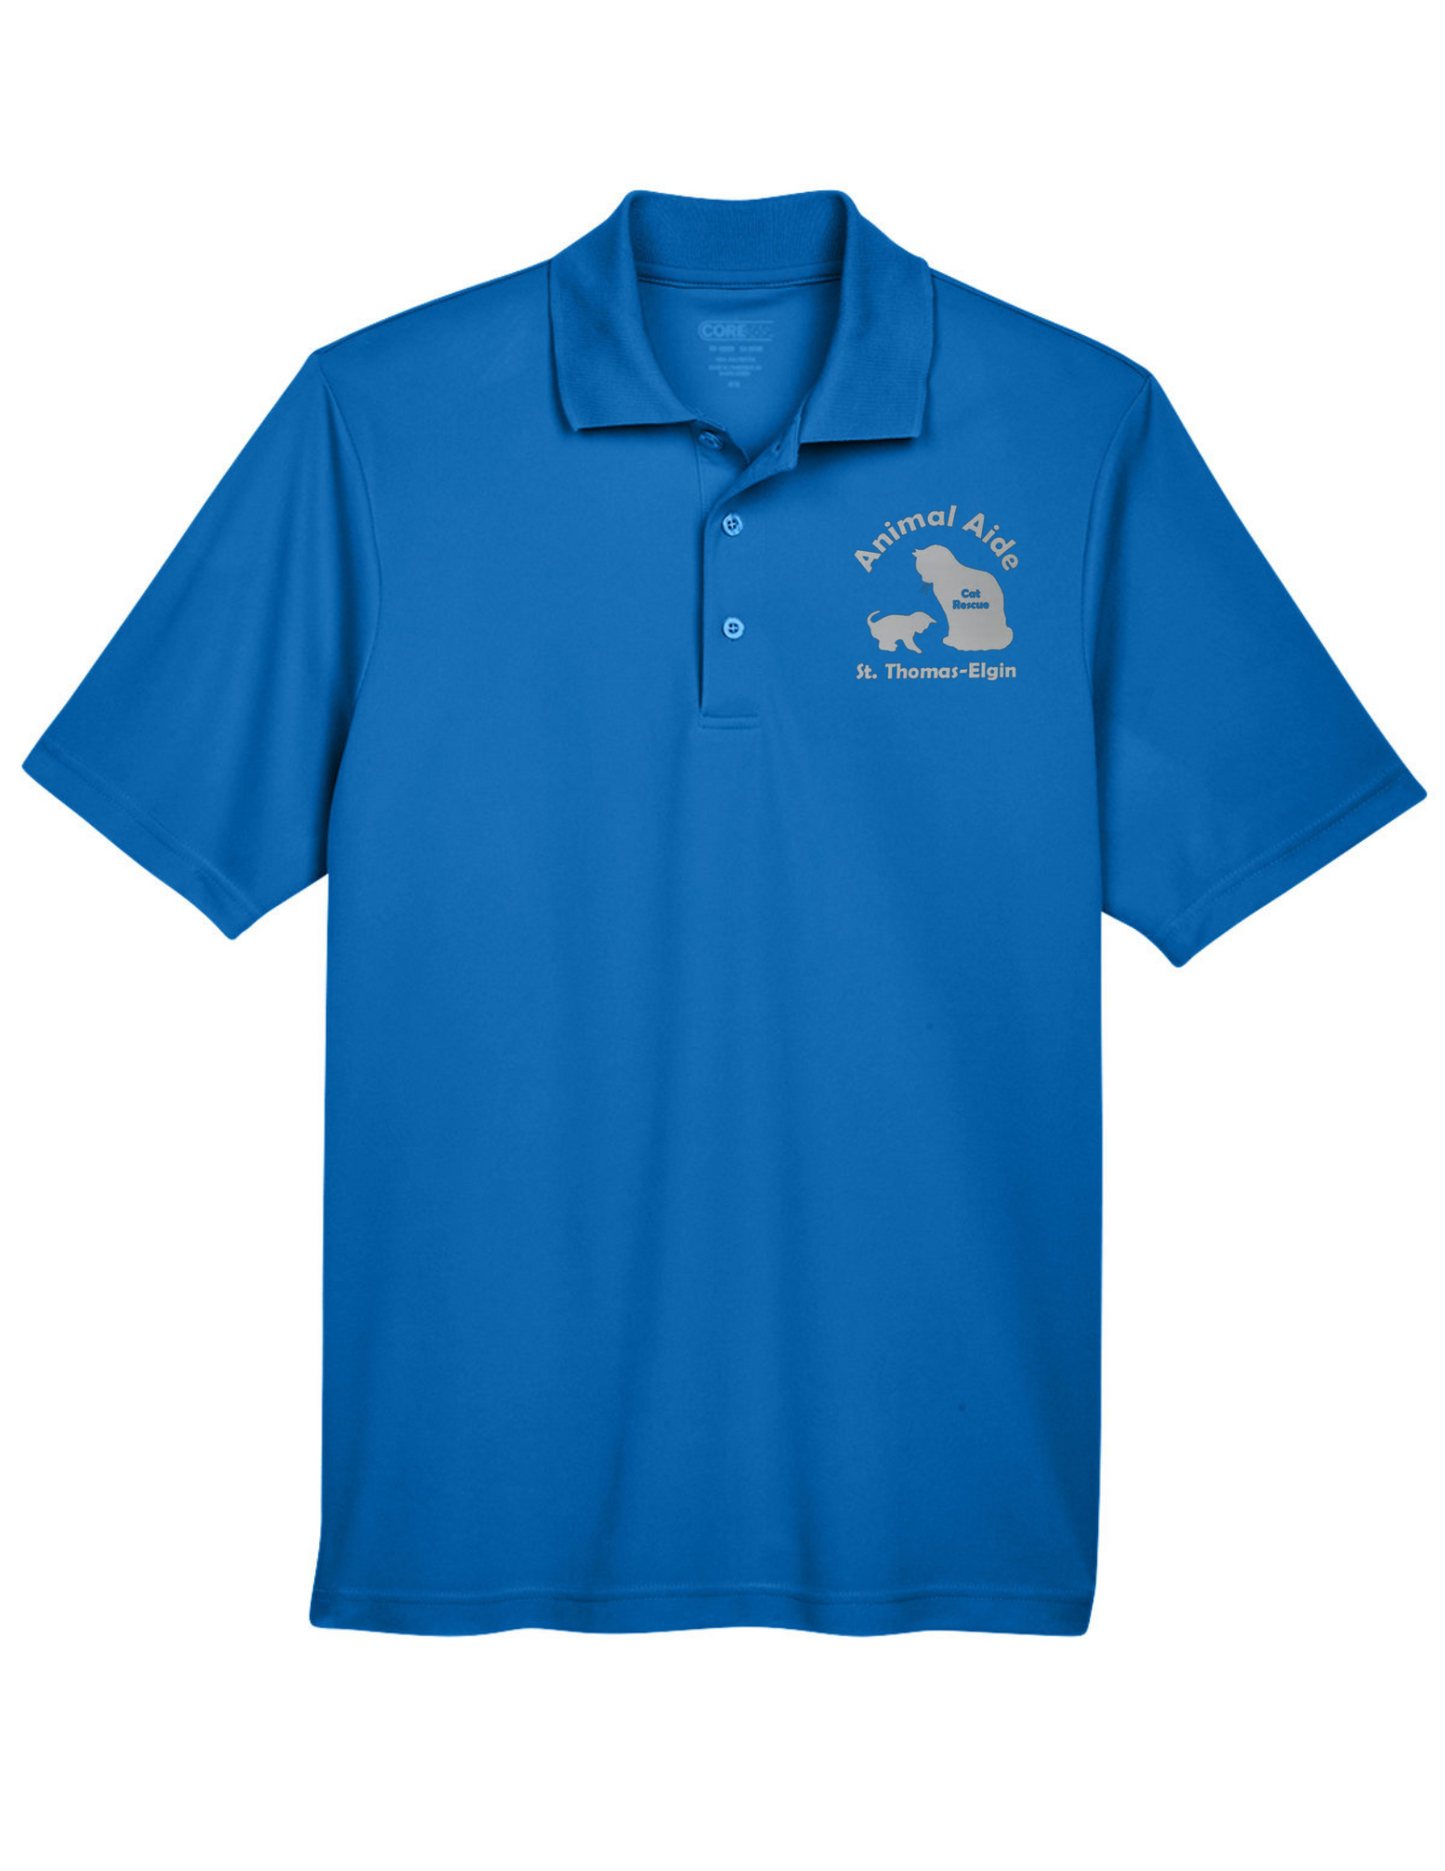 Animal Aide Golf shirt